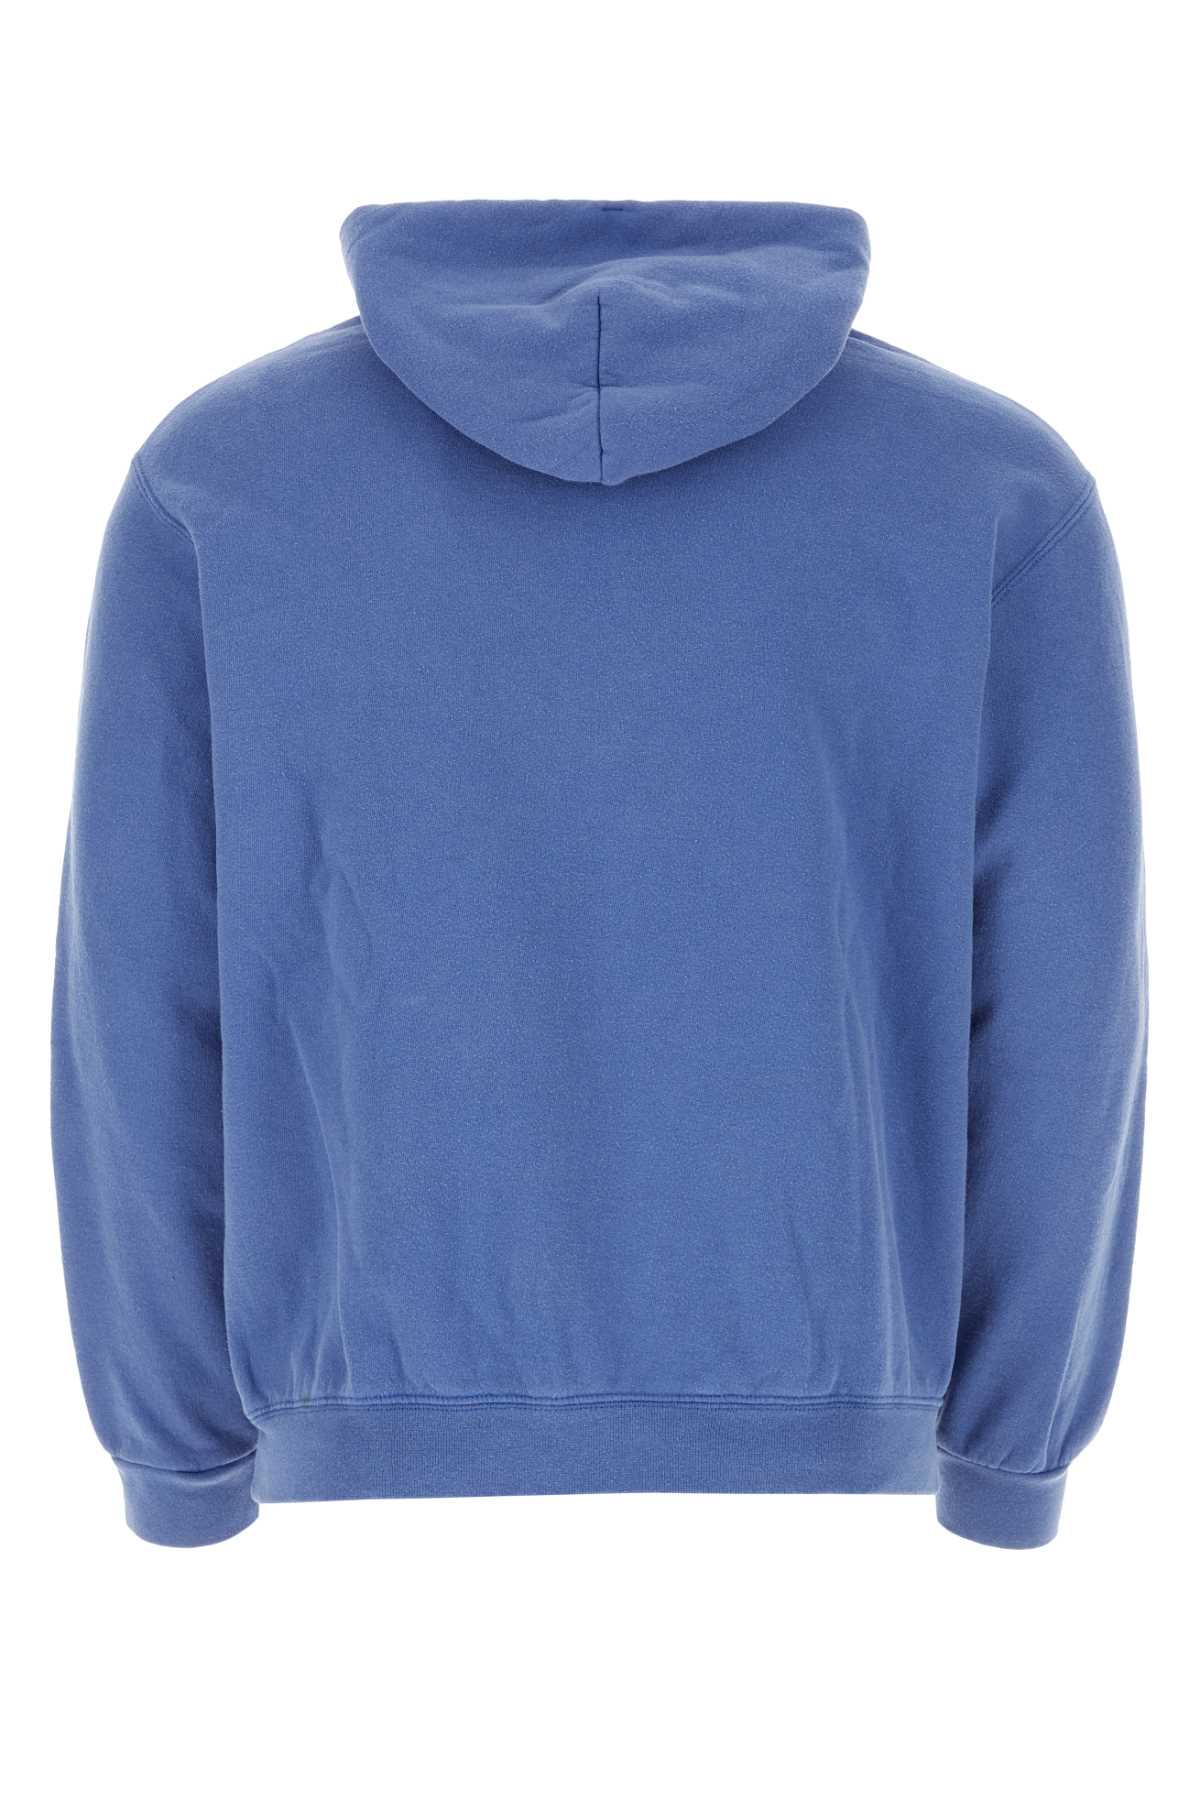 Wild Donkey Melange Blue Cotton Sweatshirt In Swroya